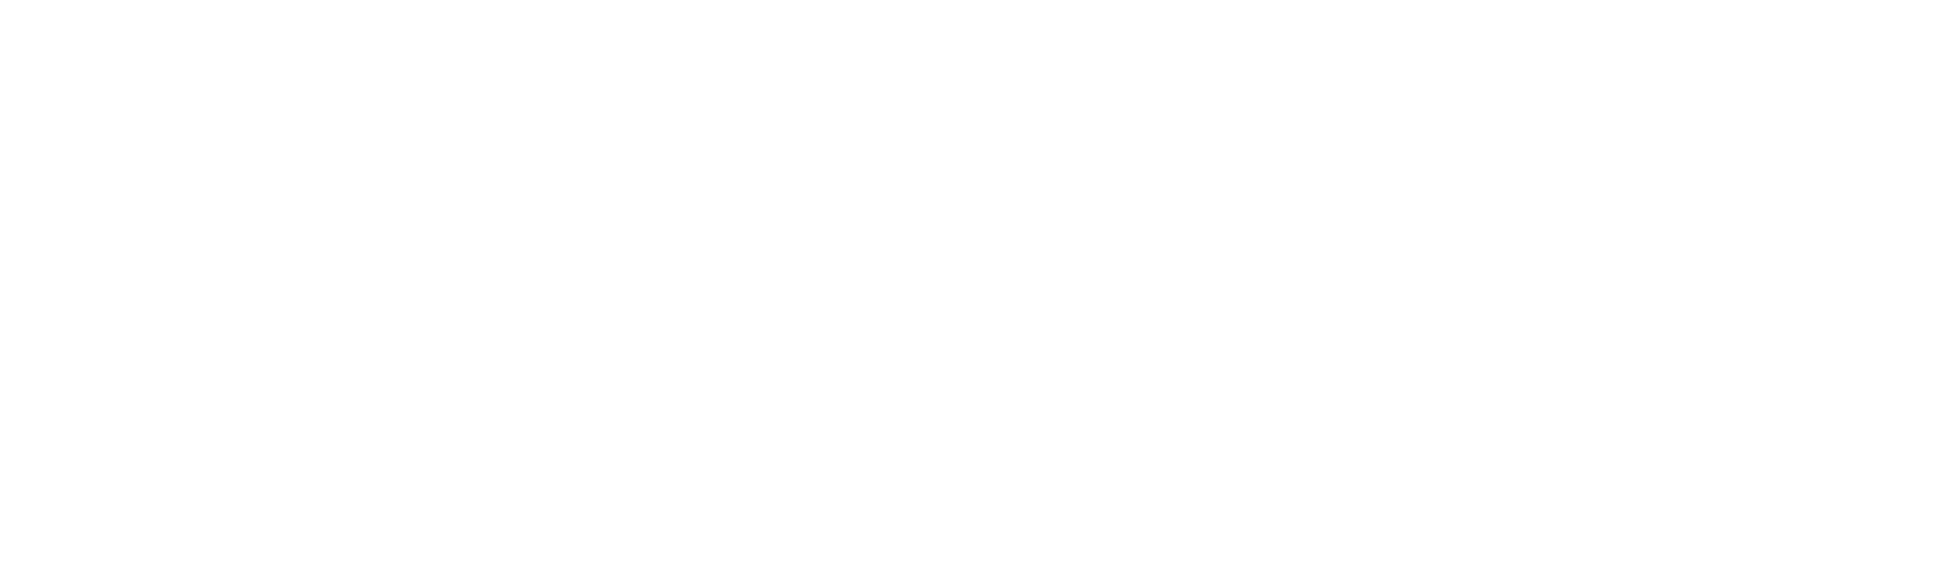 LCC Worker Benefit Plans